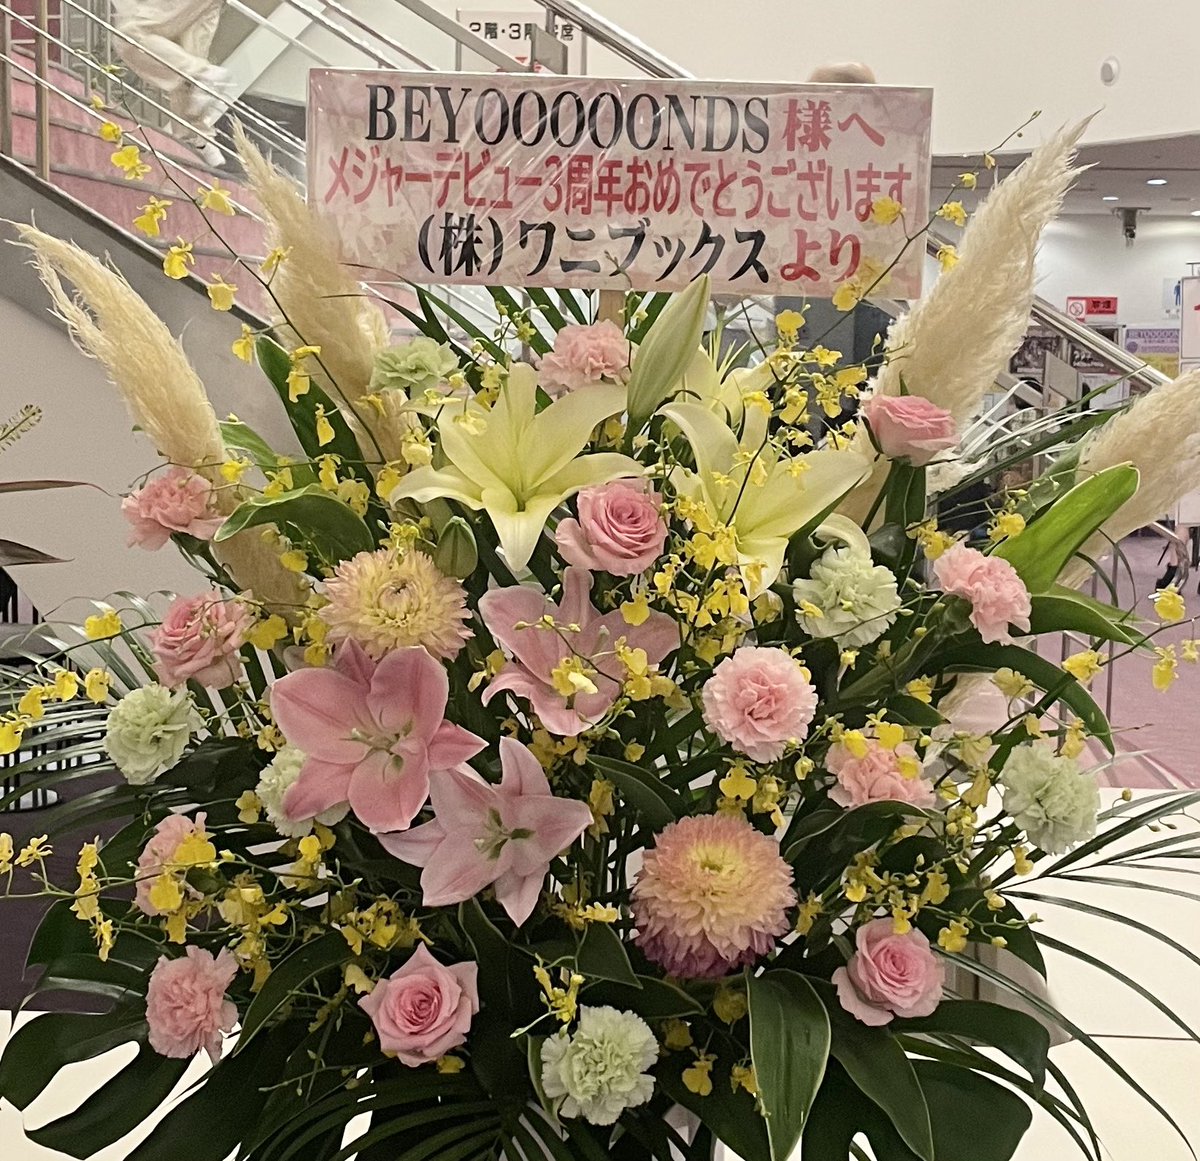 「BEYOOOOONDSデビュー3周年おめでとう!!!(^ν^)!!! 」|遠藤一同🍑 5/5【す50b】のイラスト